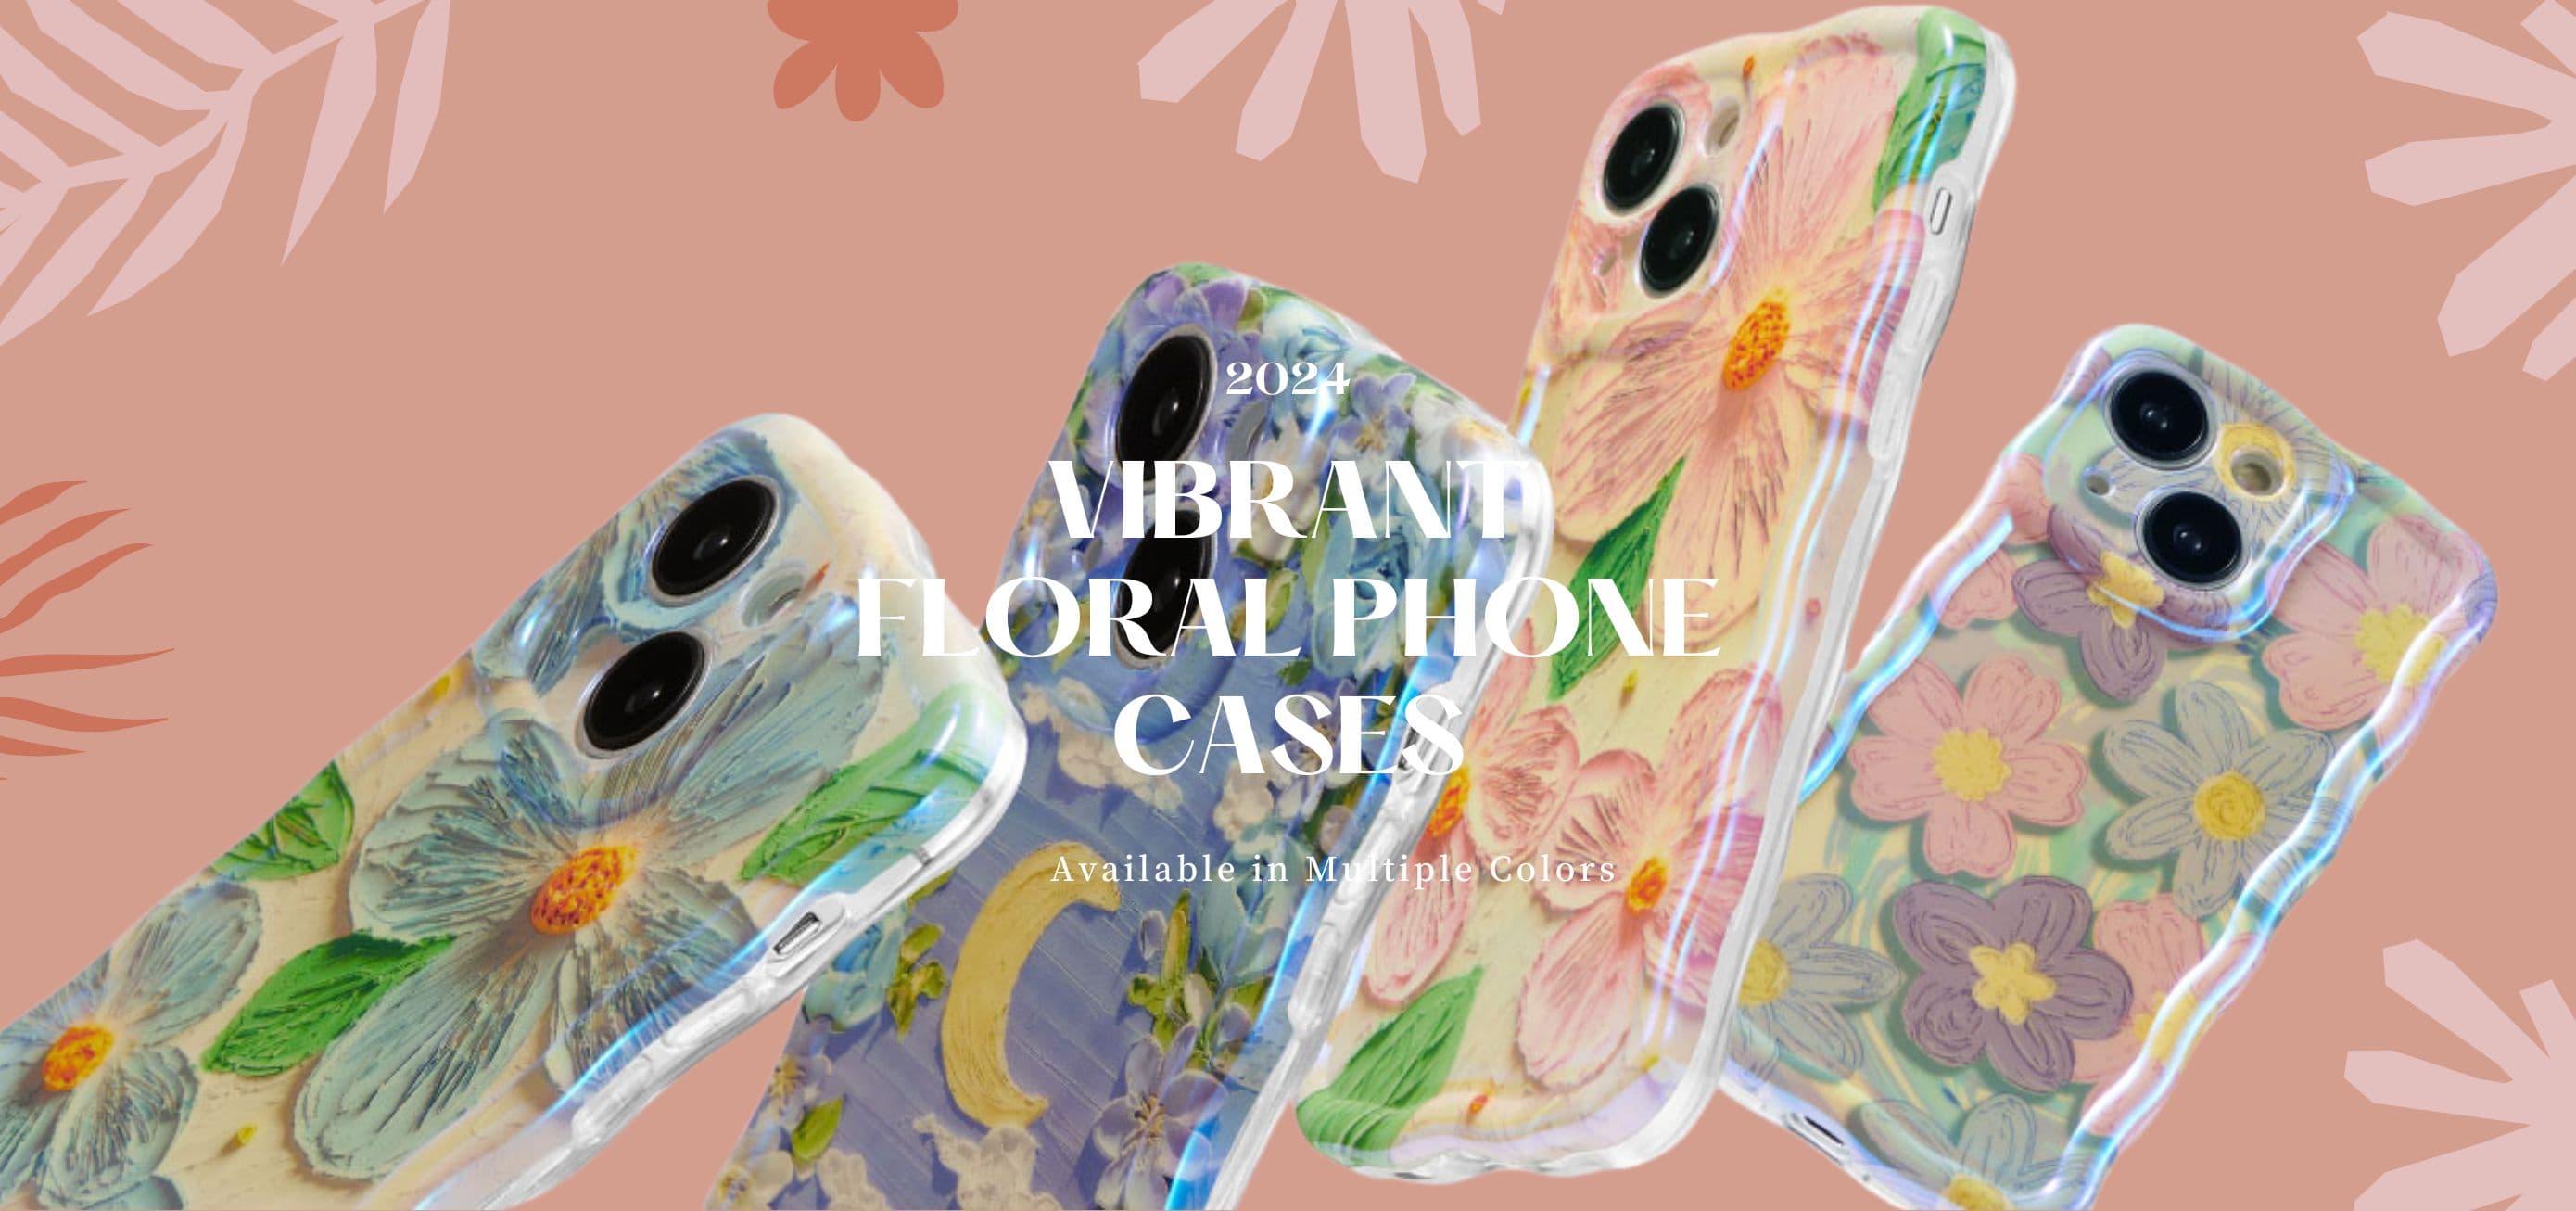 VENUCASE custom iPhone case